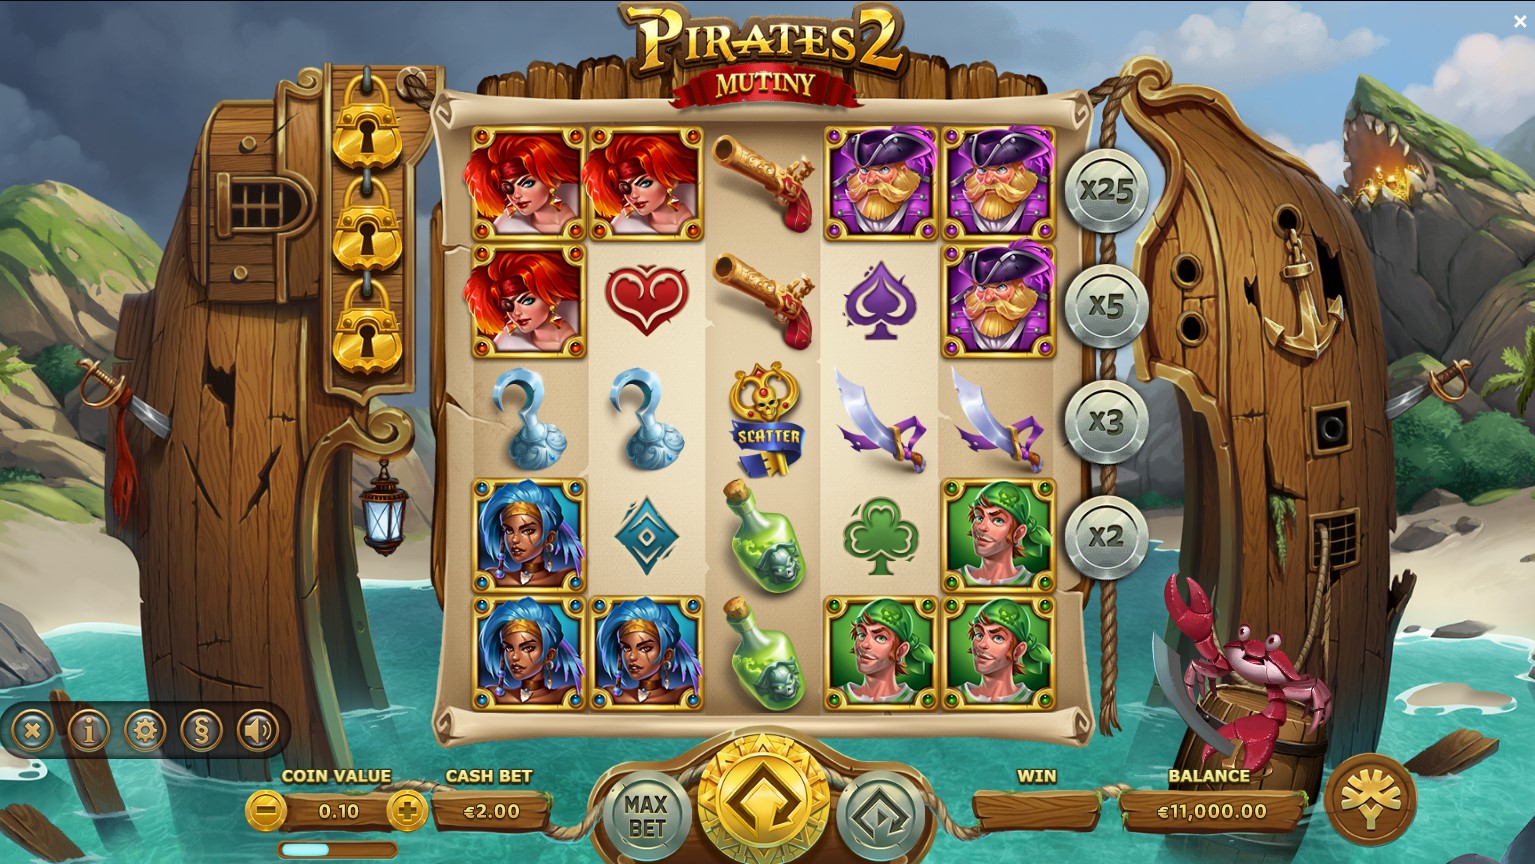 Pirates 2 Mutiny Yggdrasil